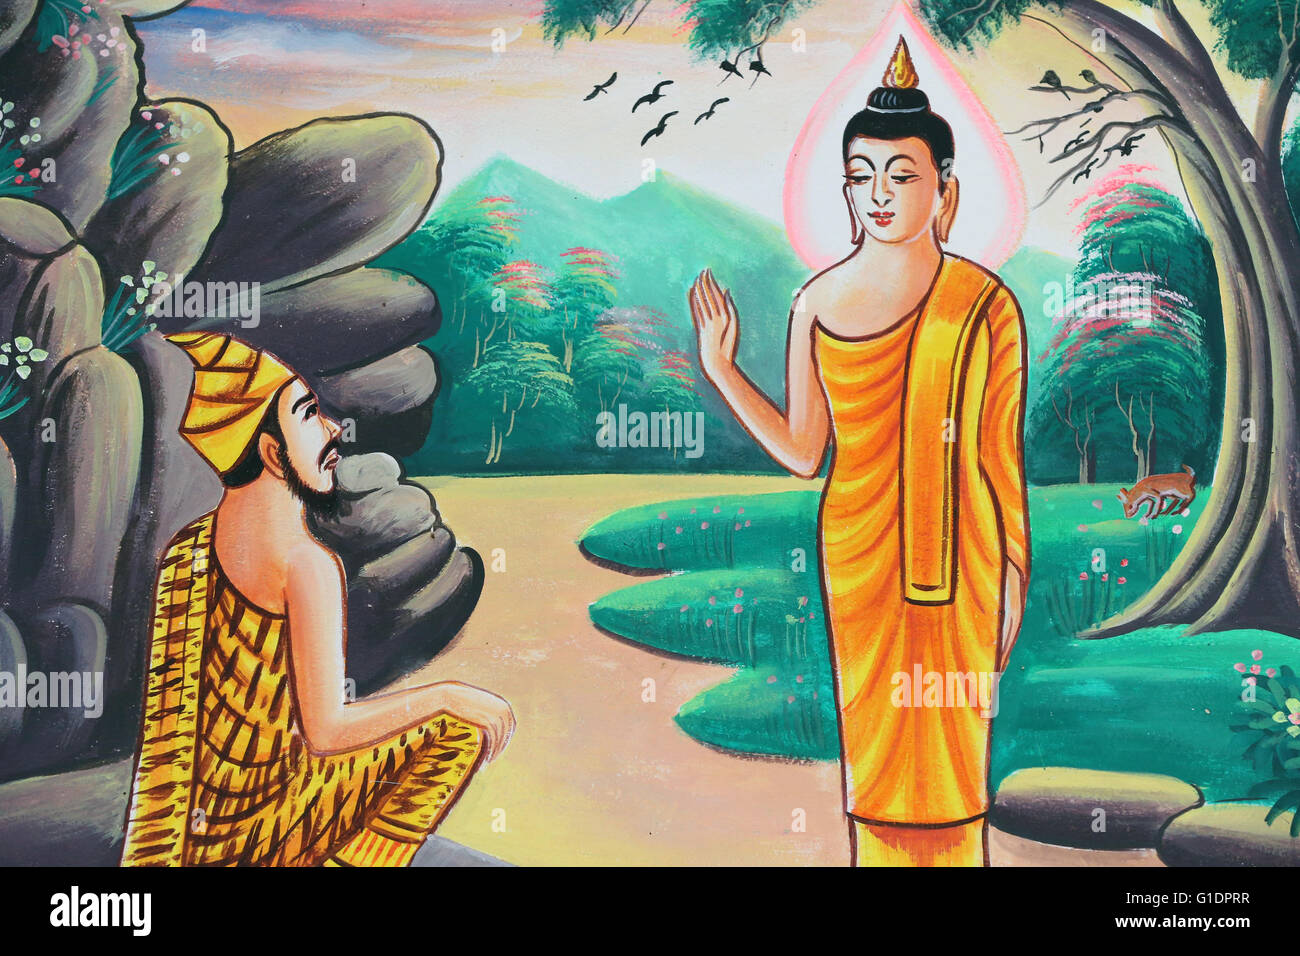 Painting depicting the life story of Shakyamuni Buddha. Kasi. Laos. Stock Photo